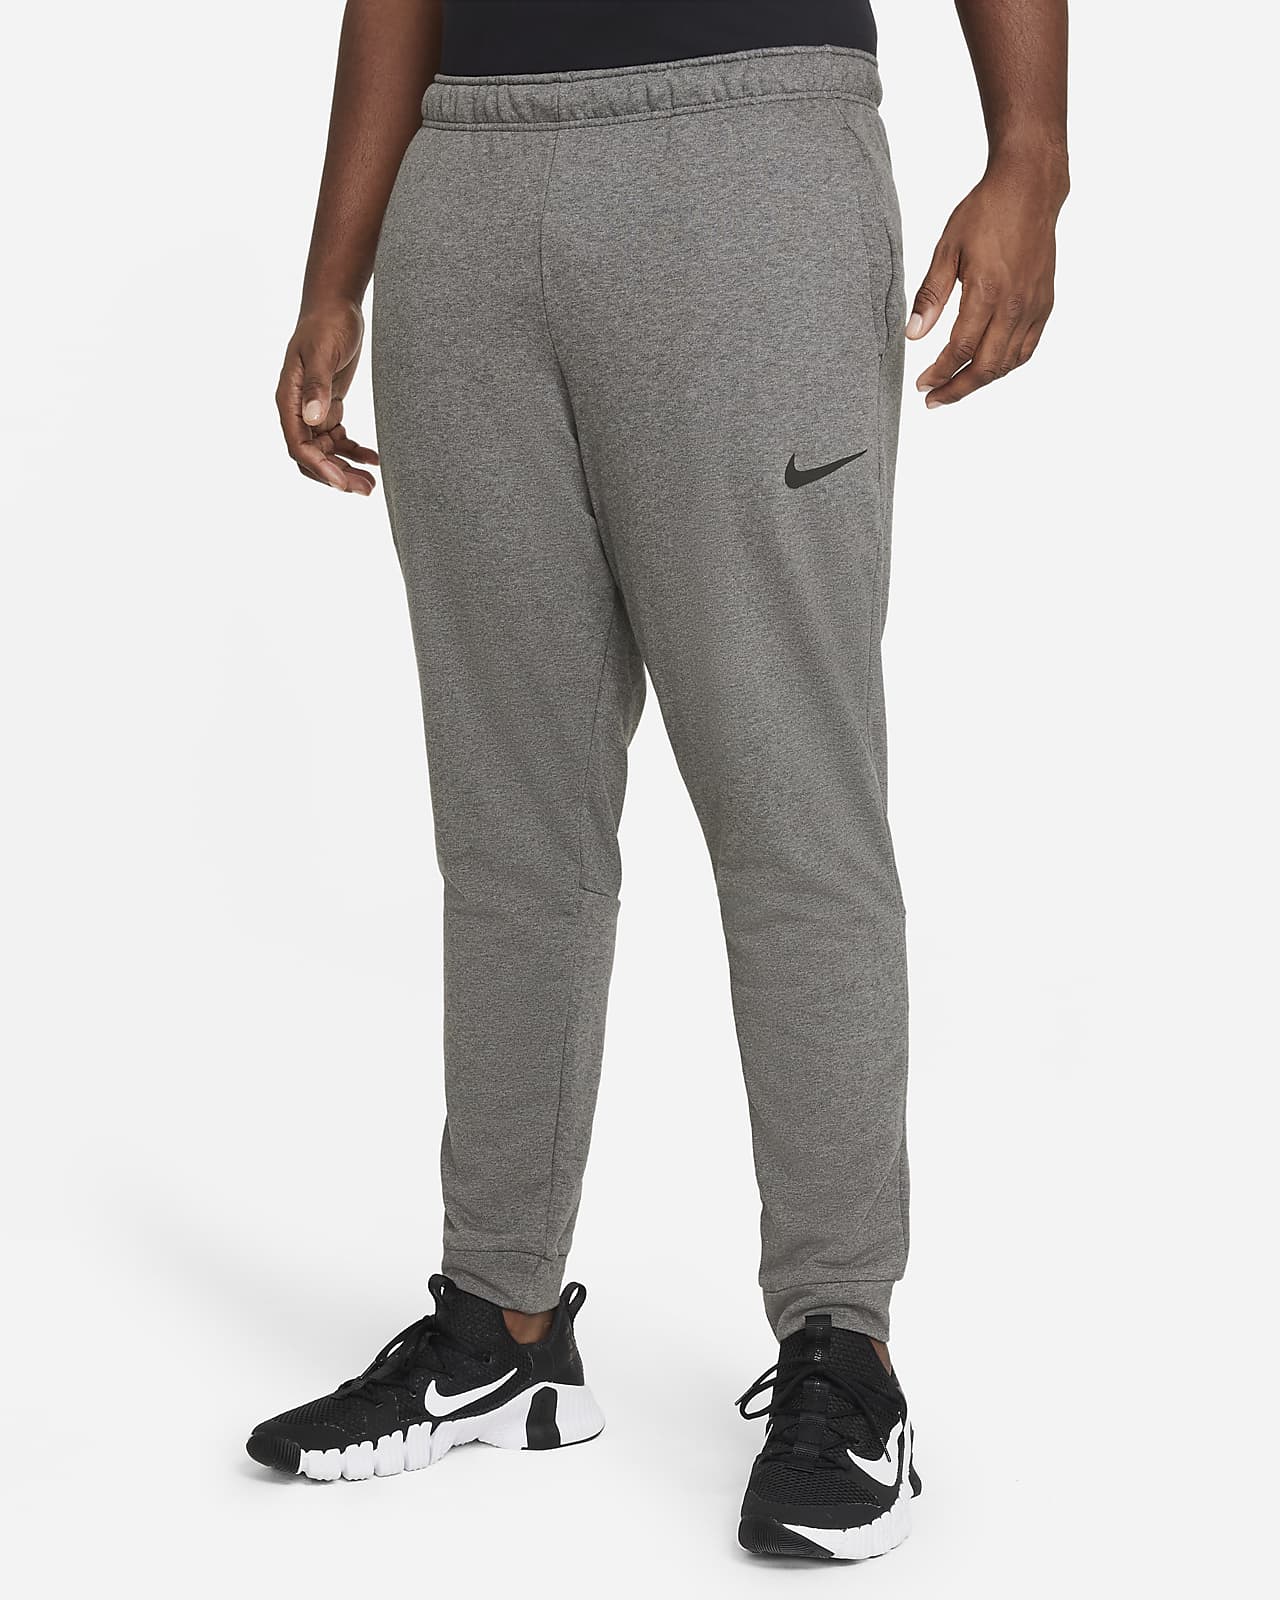 Permanent krans ze Nike Dry Men's Dri-FIT Taper Fitness Fleece Pants. Nike.com